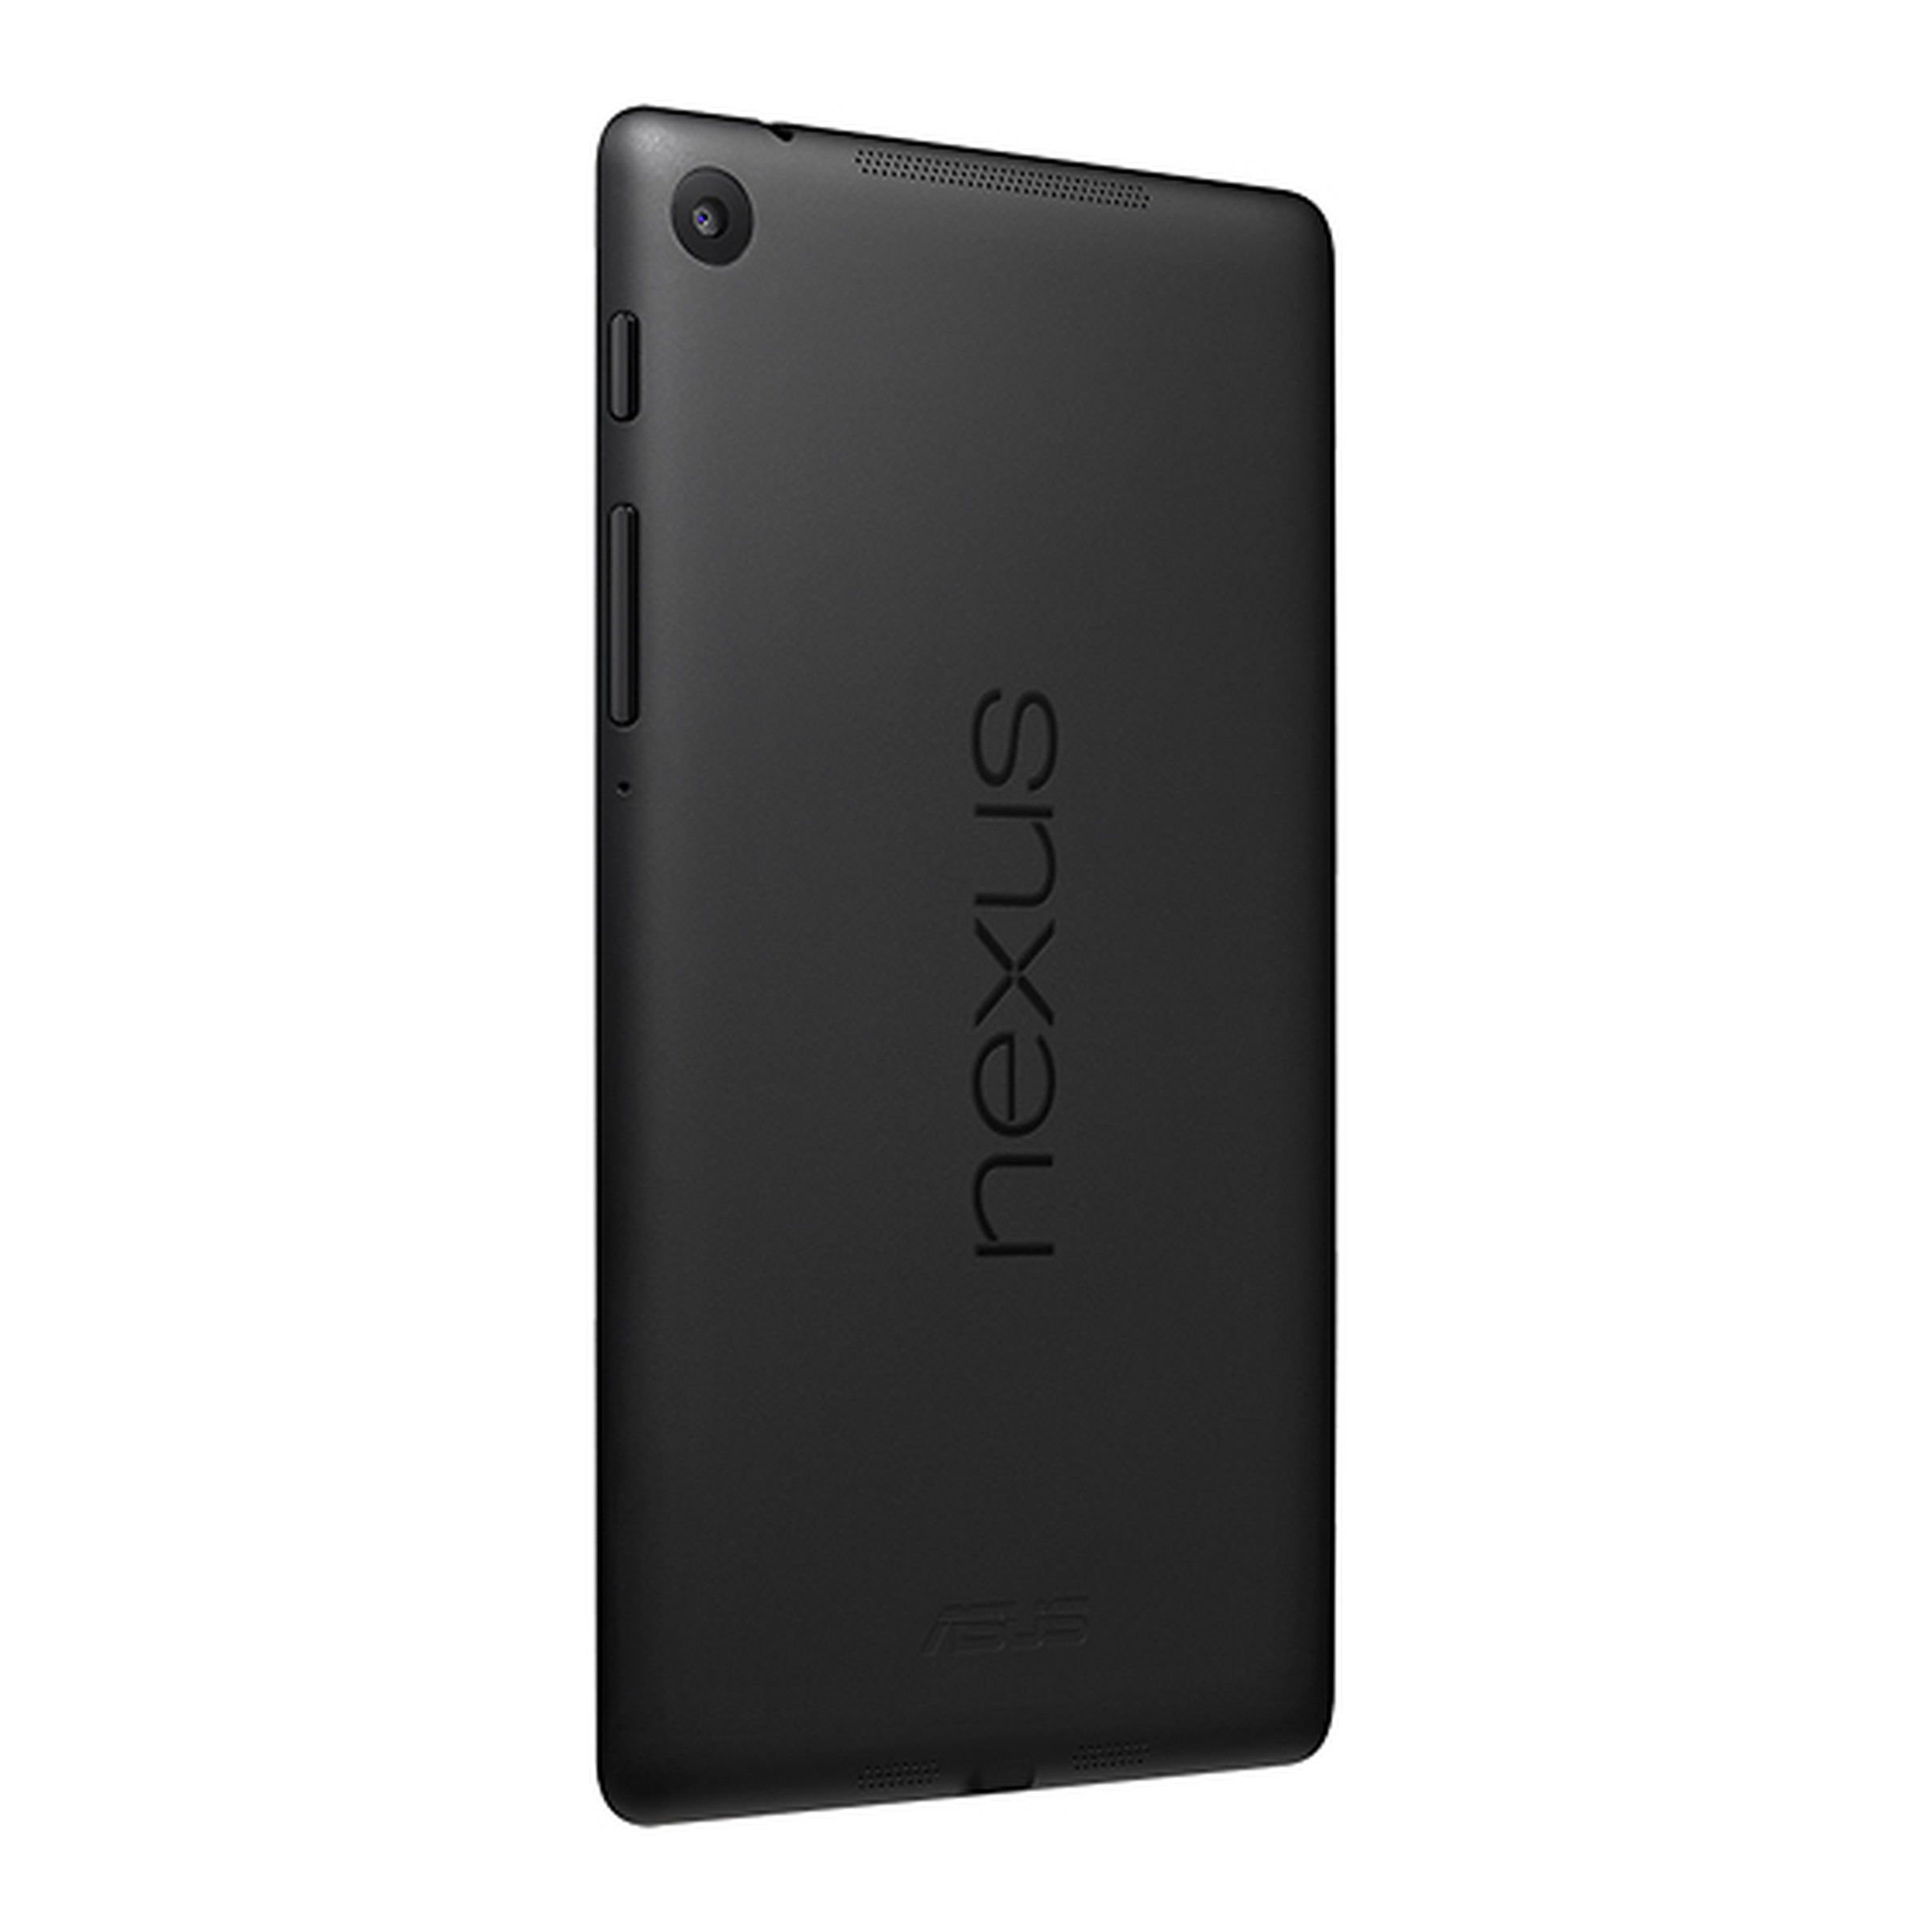 Nexus 7 (2013) at Best Buy: official photos